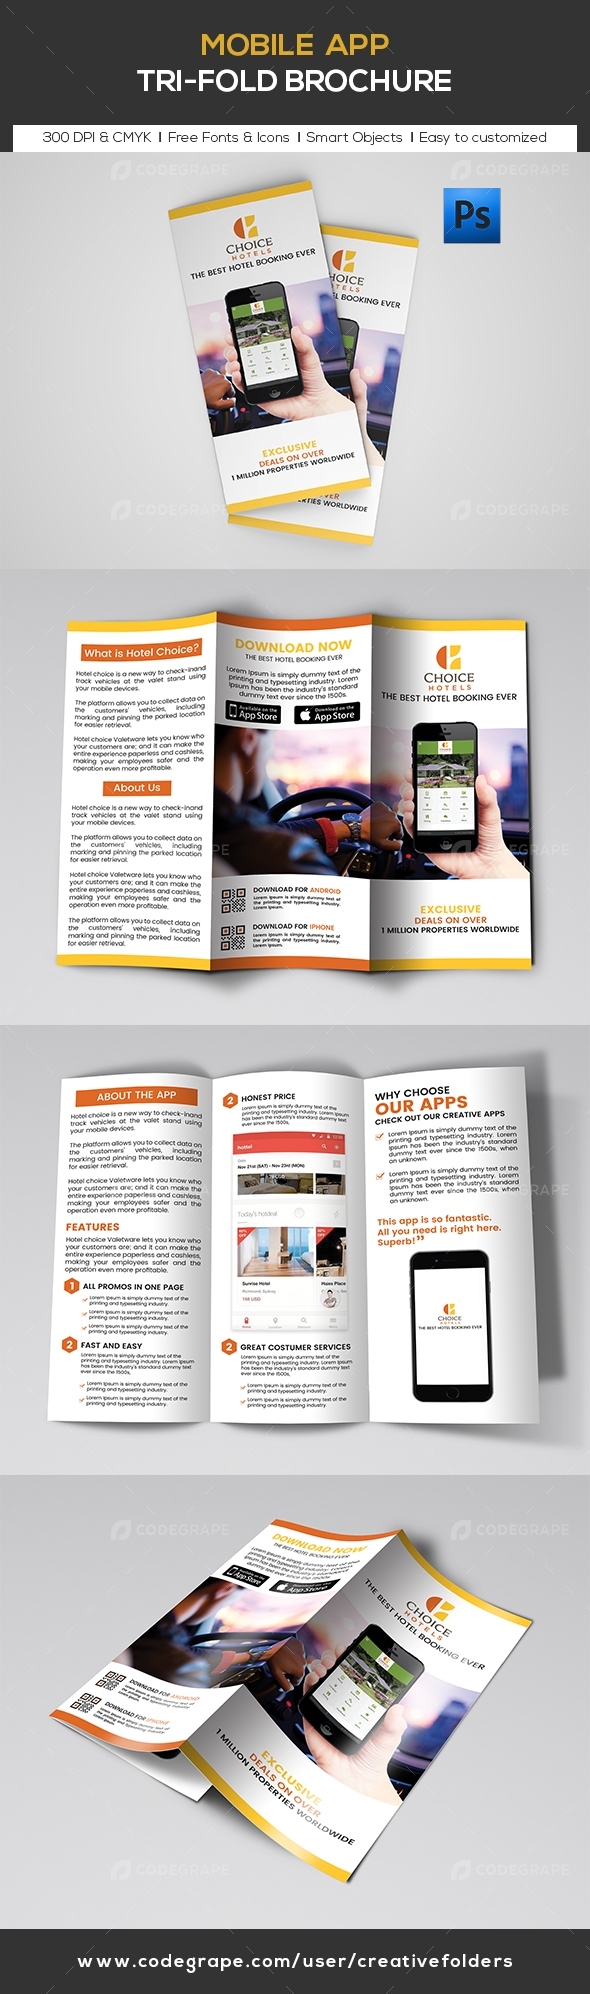 Mobile App Trifold Brochure